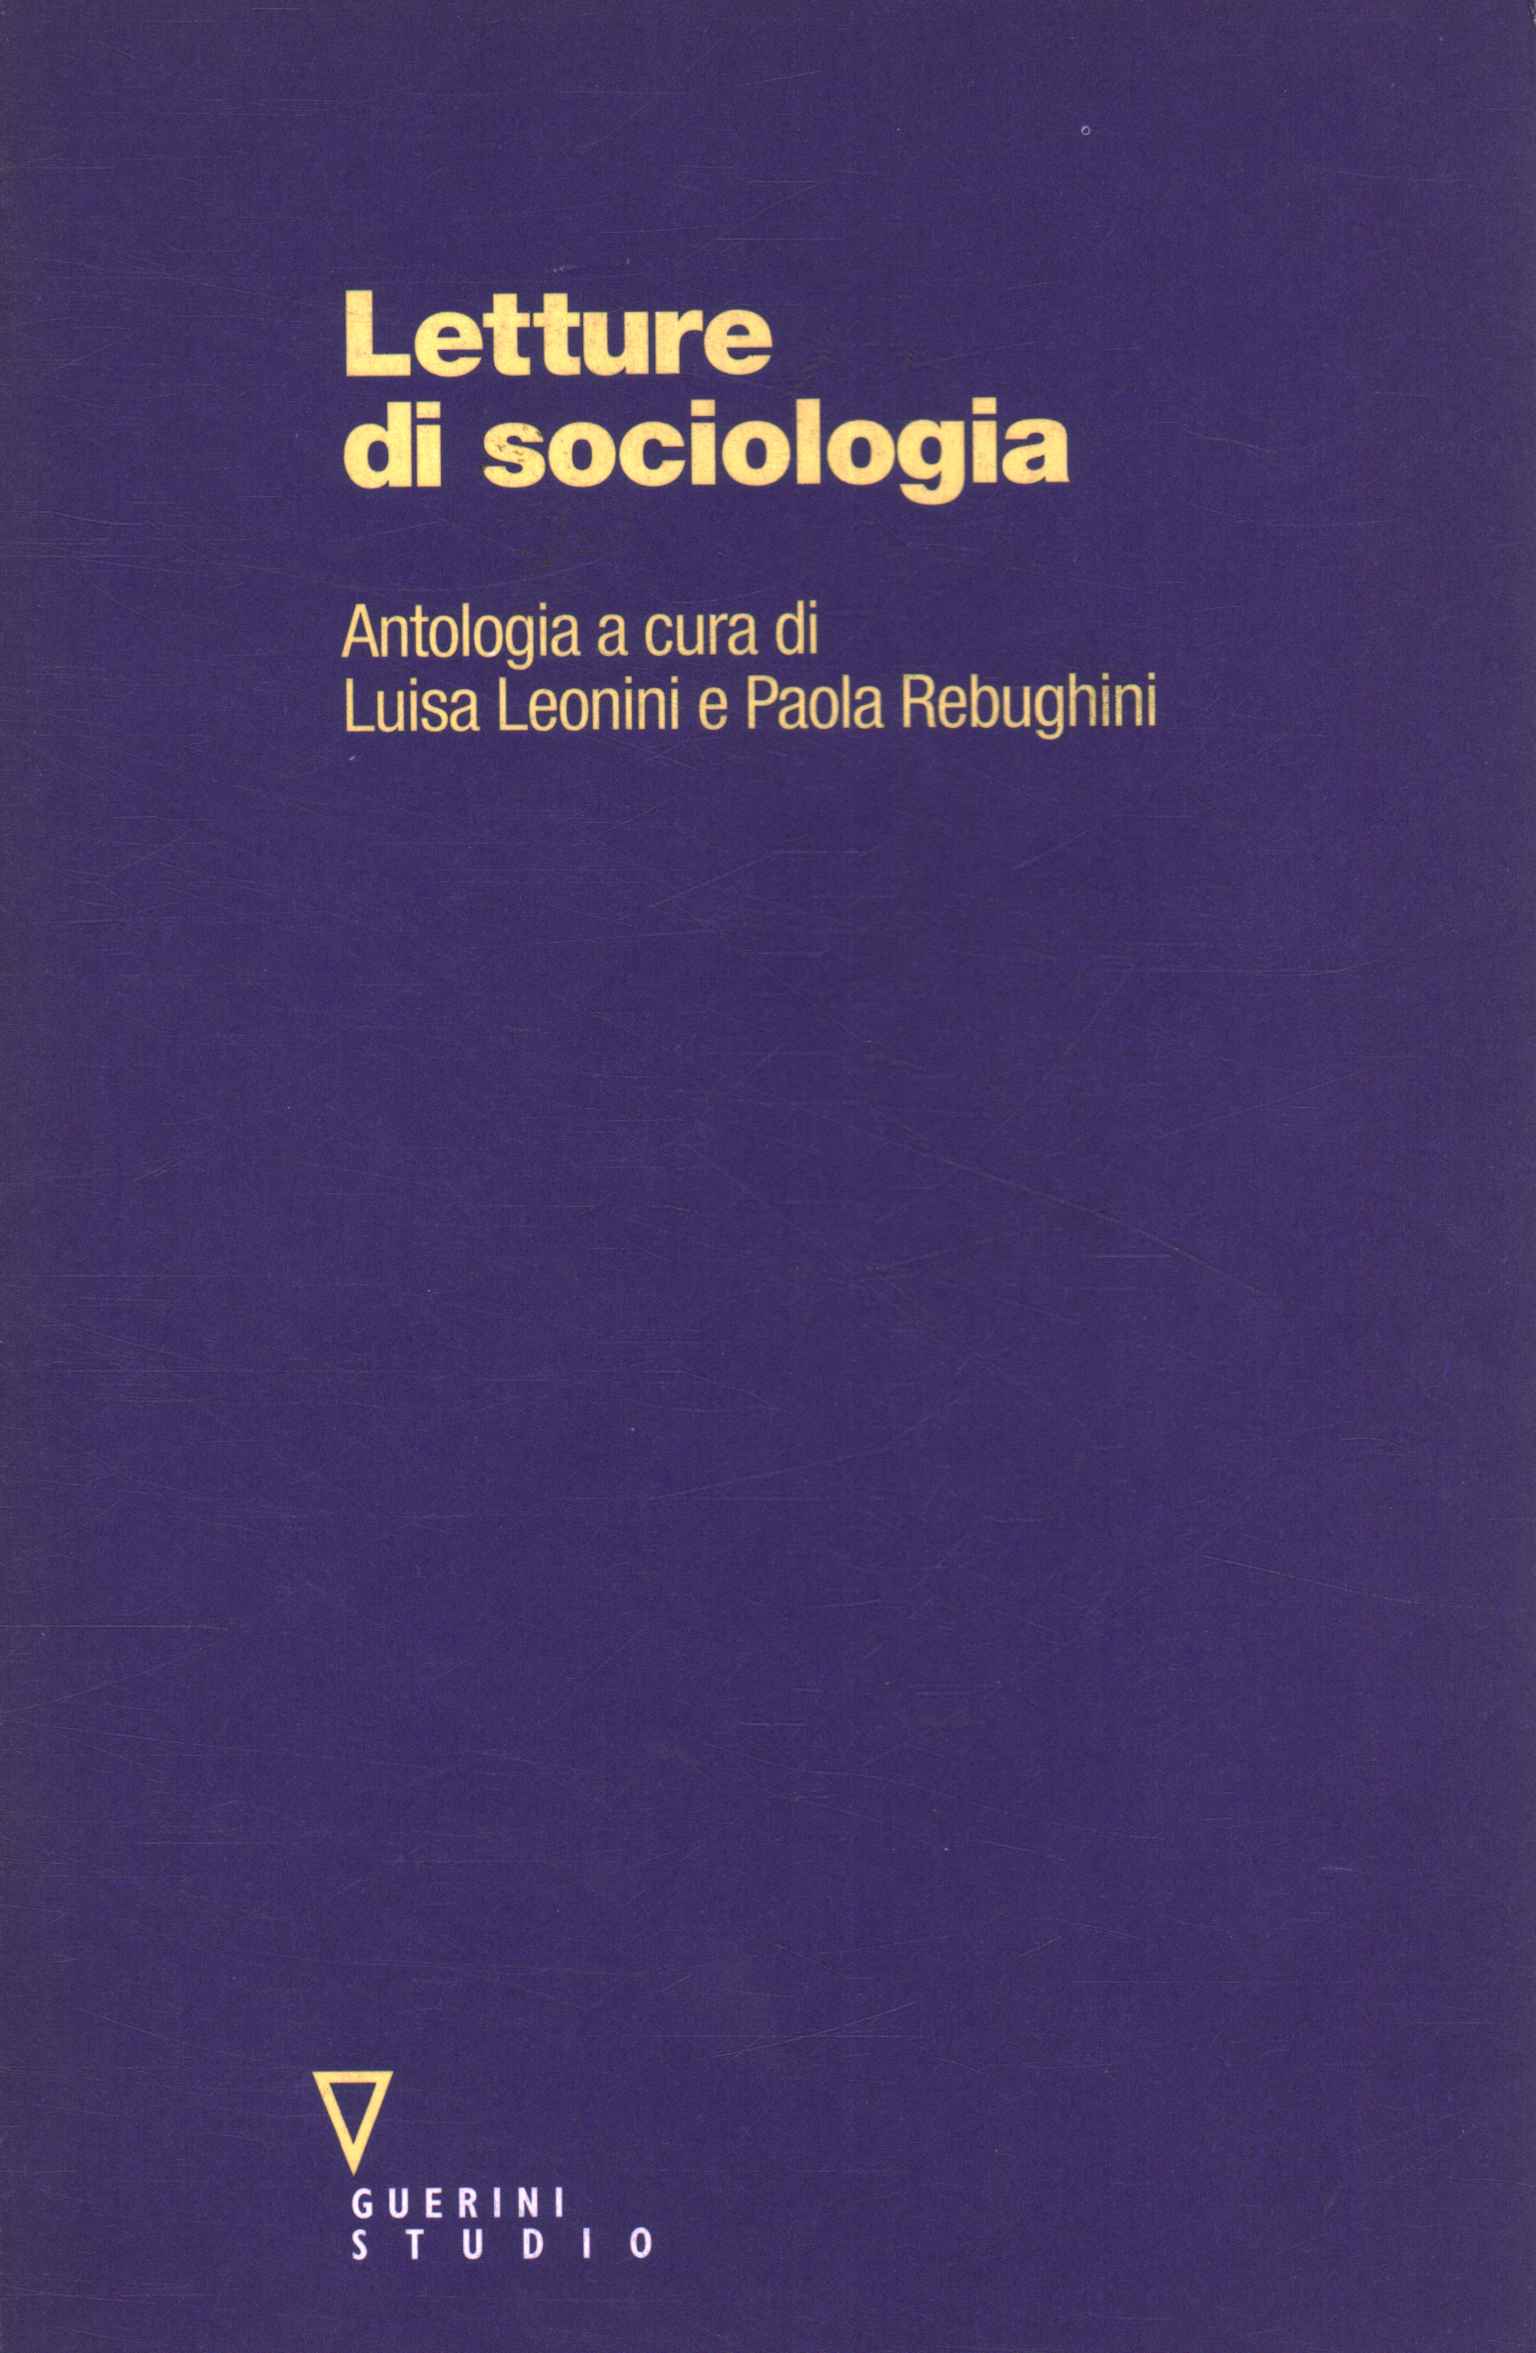 Lectures de sociologie